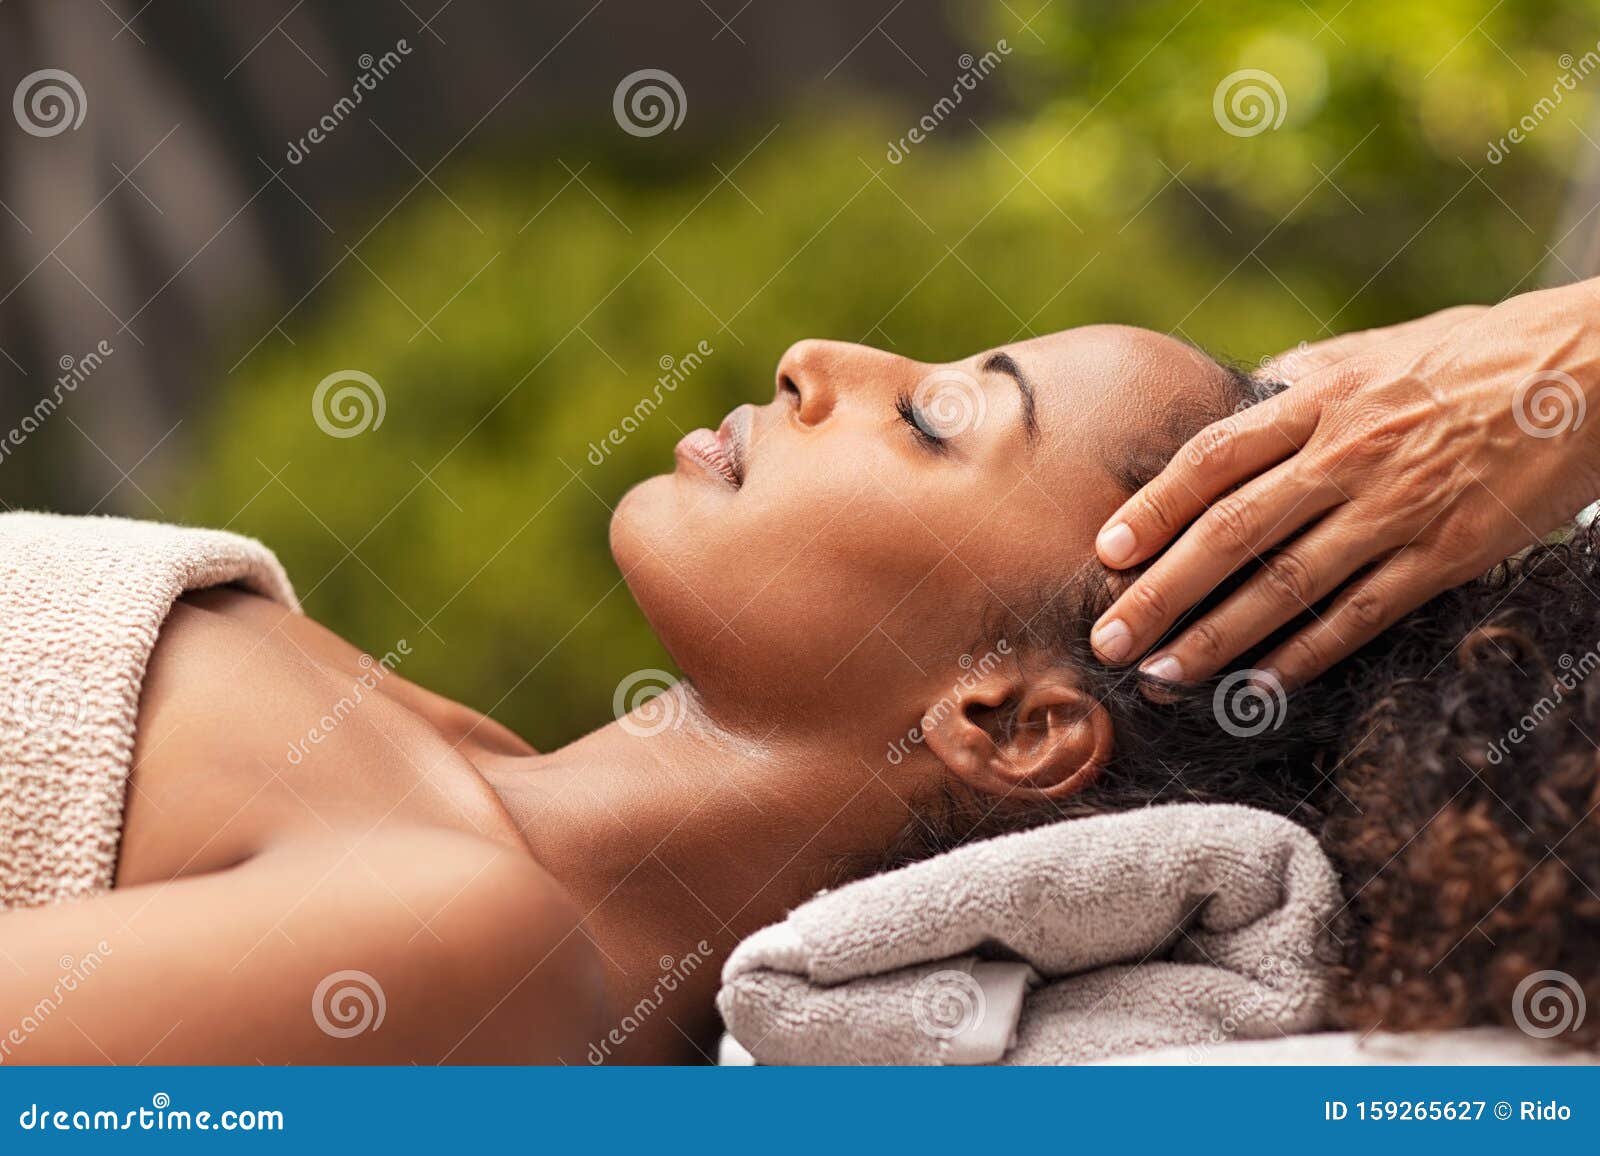 hot ebony african massage sexy photo